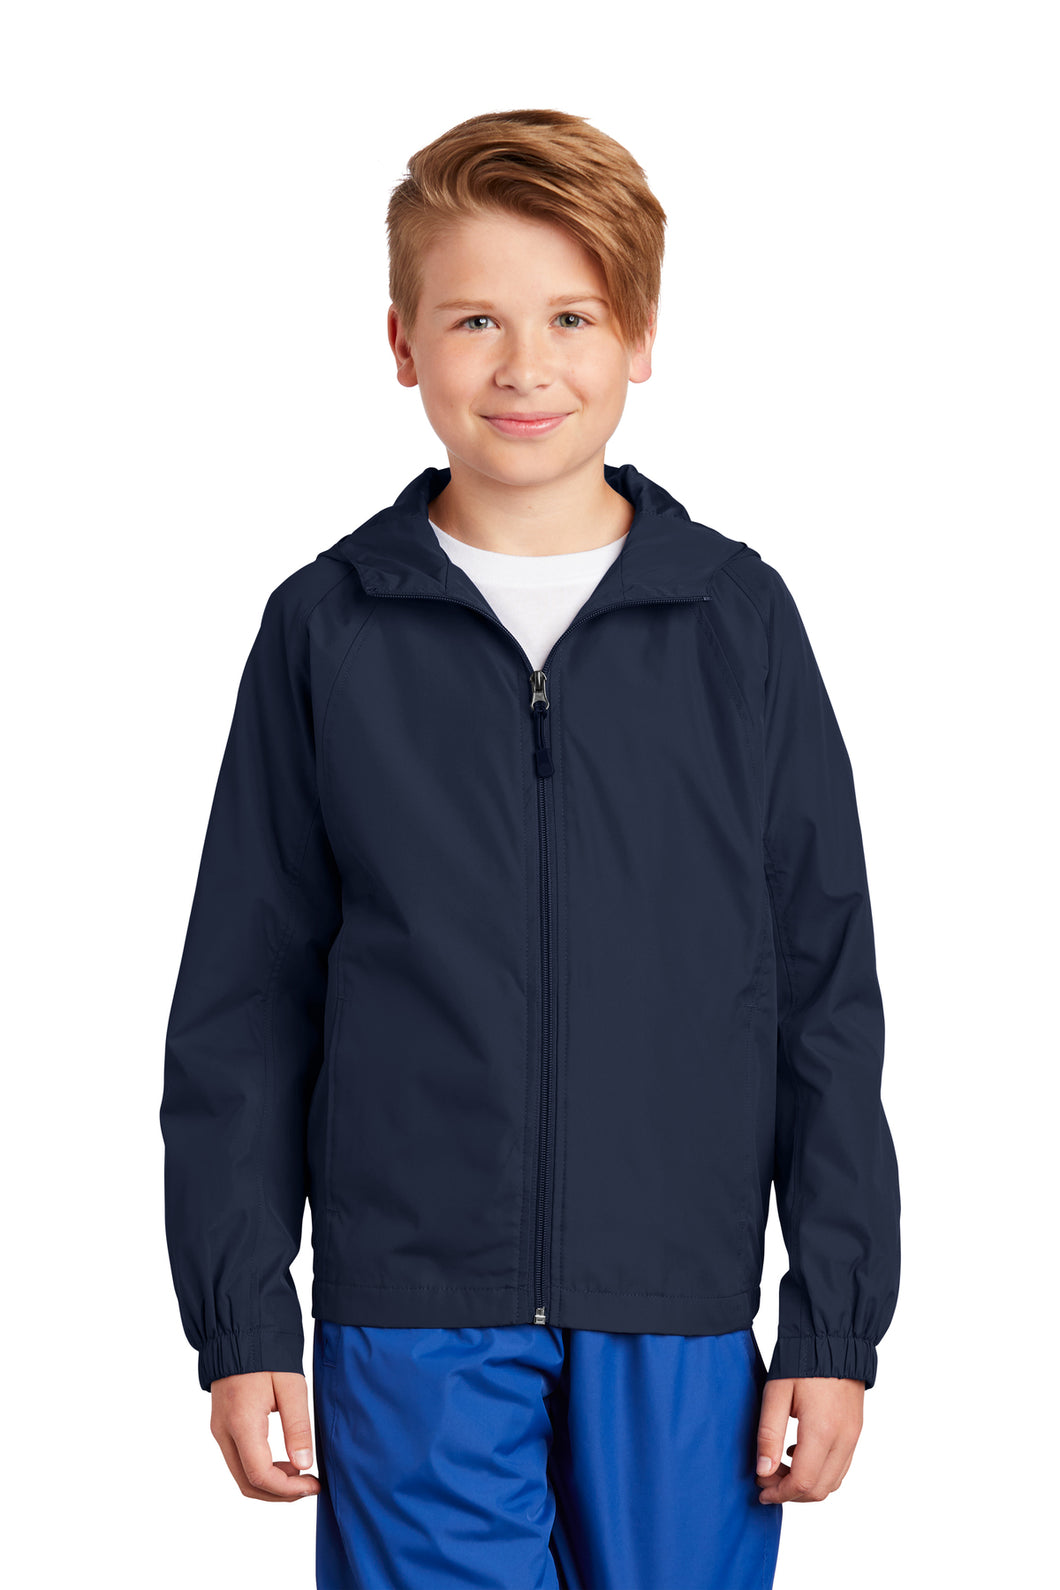 Keystone Eq- Sport Tek- Youth Hooded Raglan Jacket